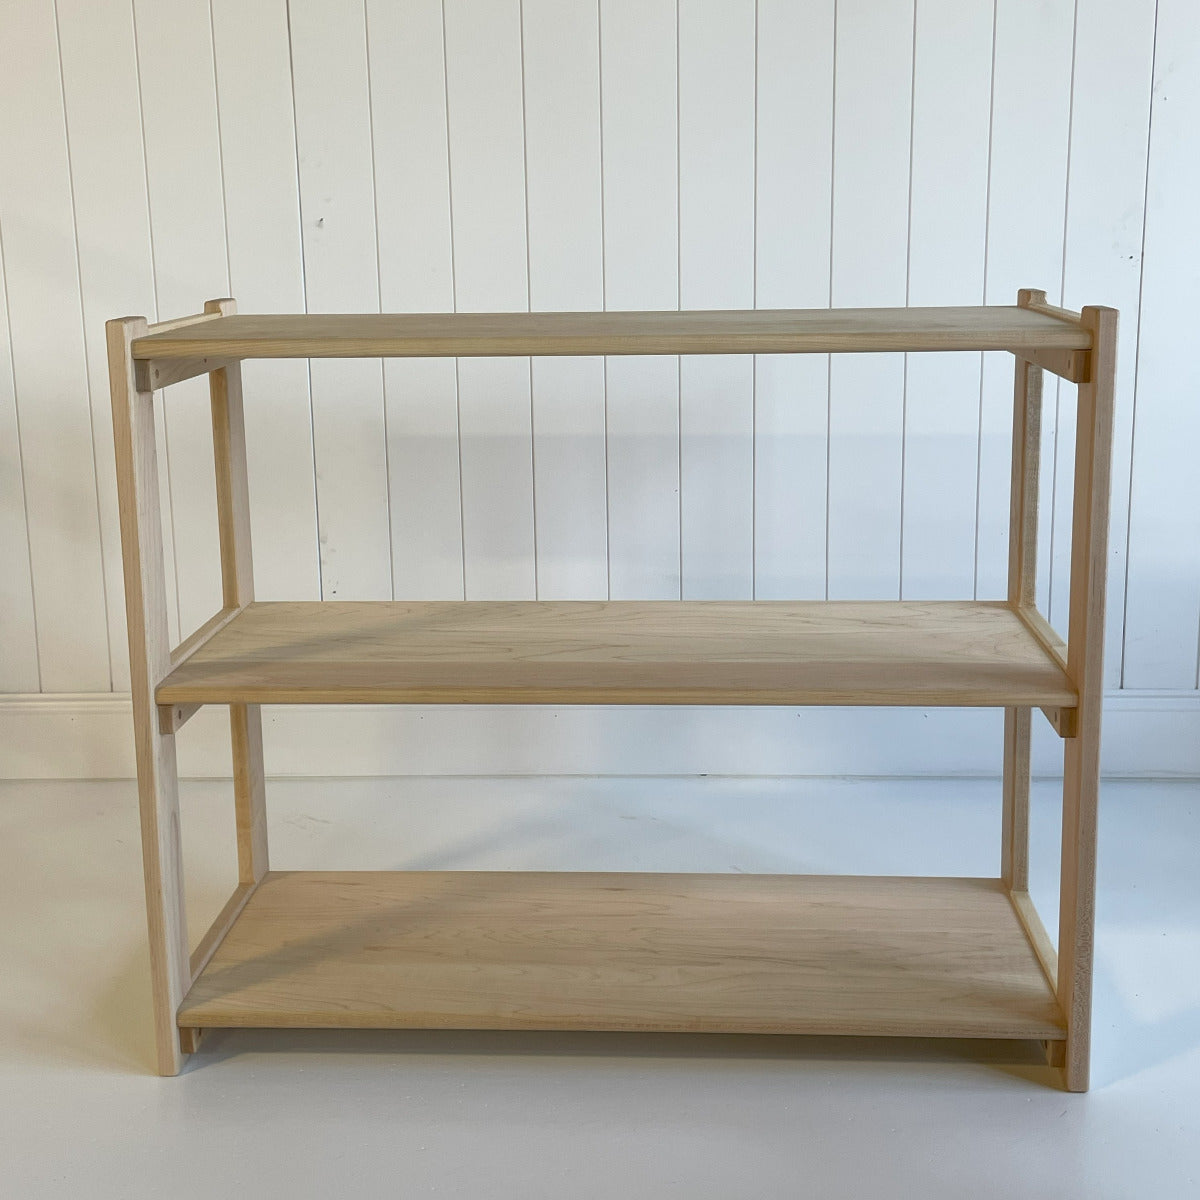 Maple Wood Open Shelving - 3 Shelves